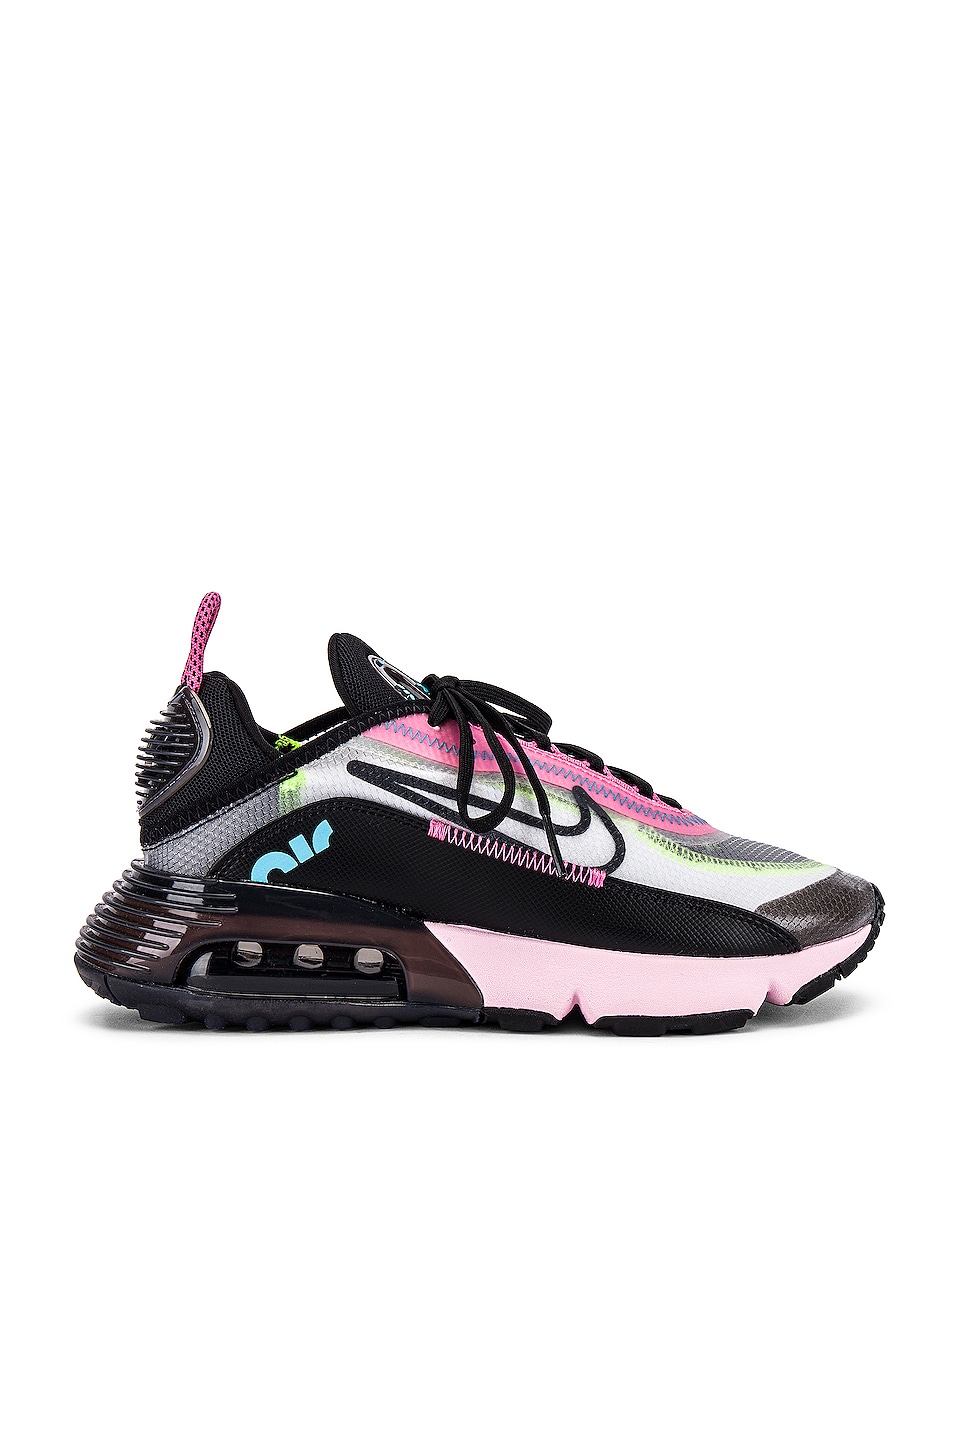 air max 2090 og sneaker in black & pink